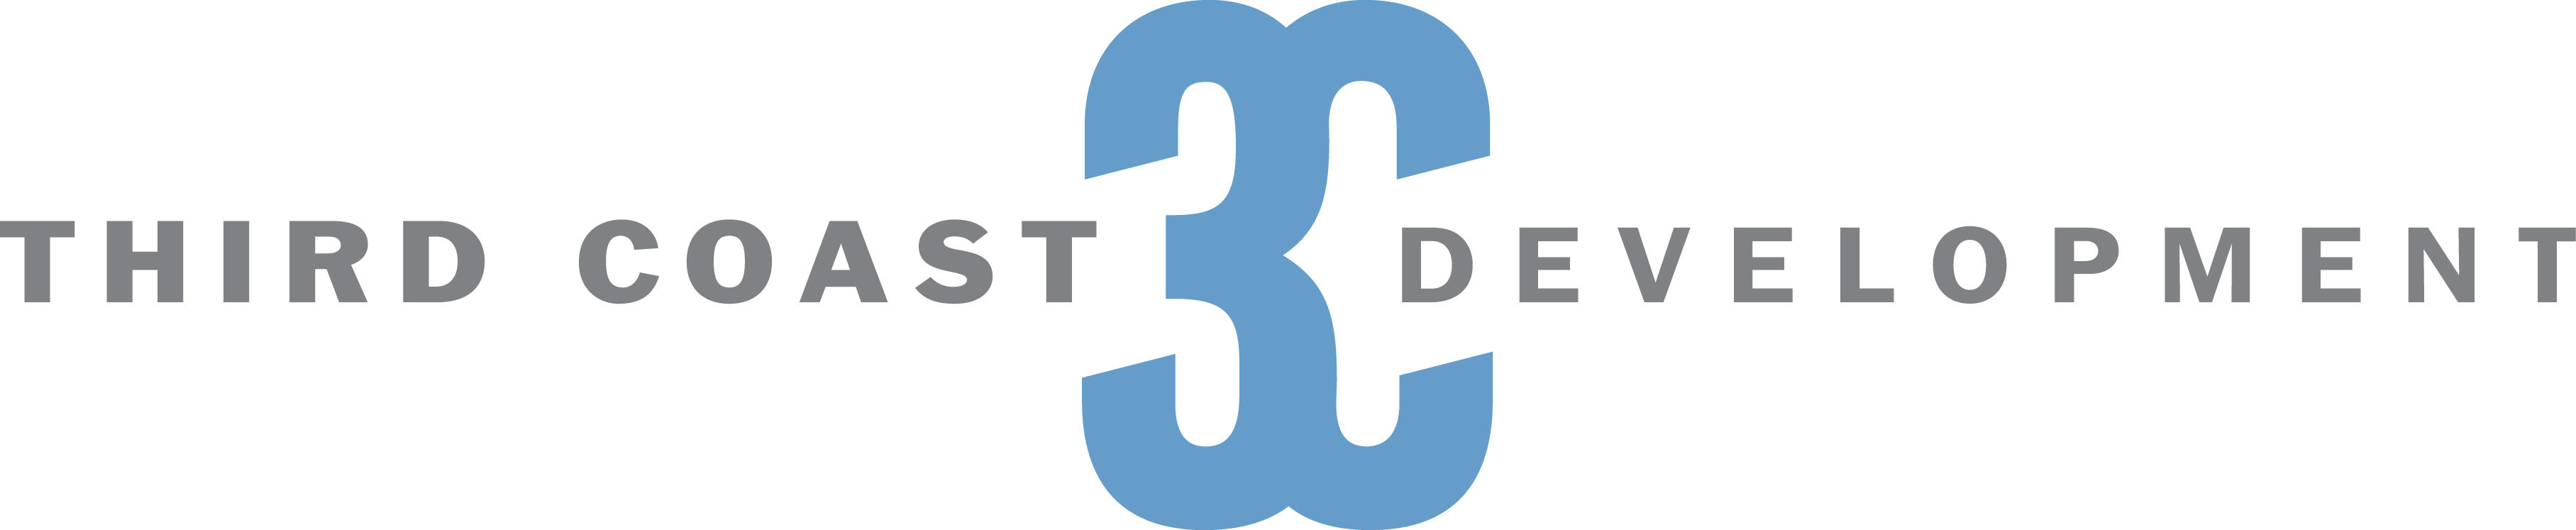 Third Coast Development - logo